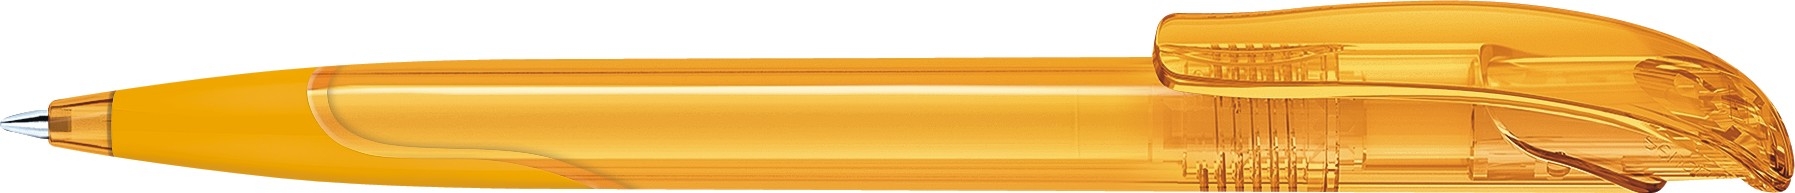  2597 ШР  Challenger Clear Soft желтый 7408, желтый, пластик